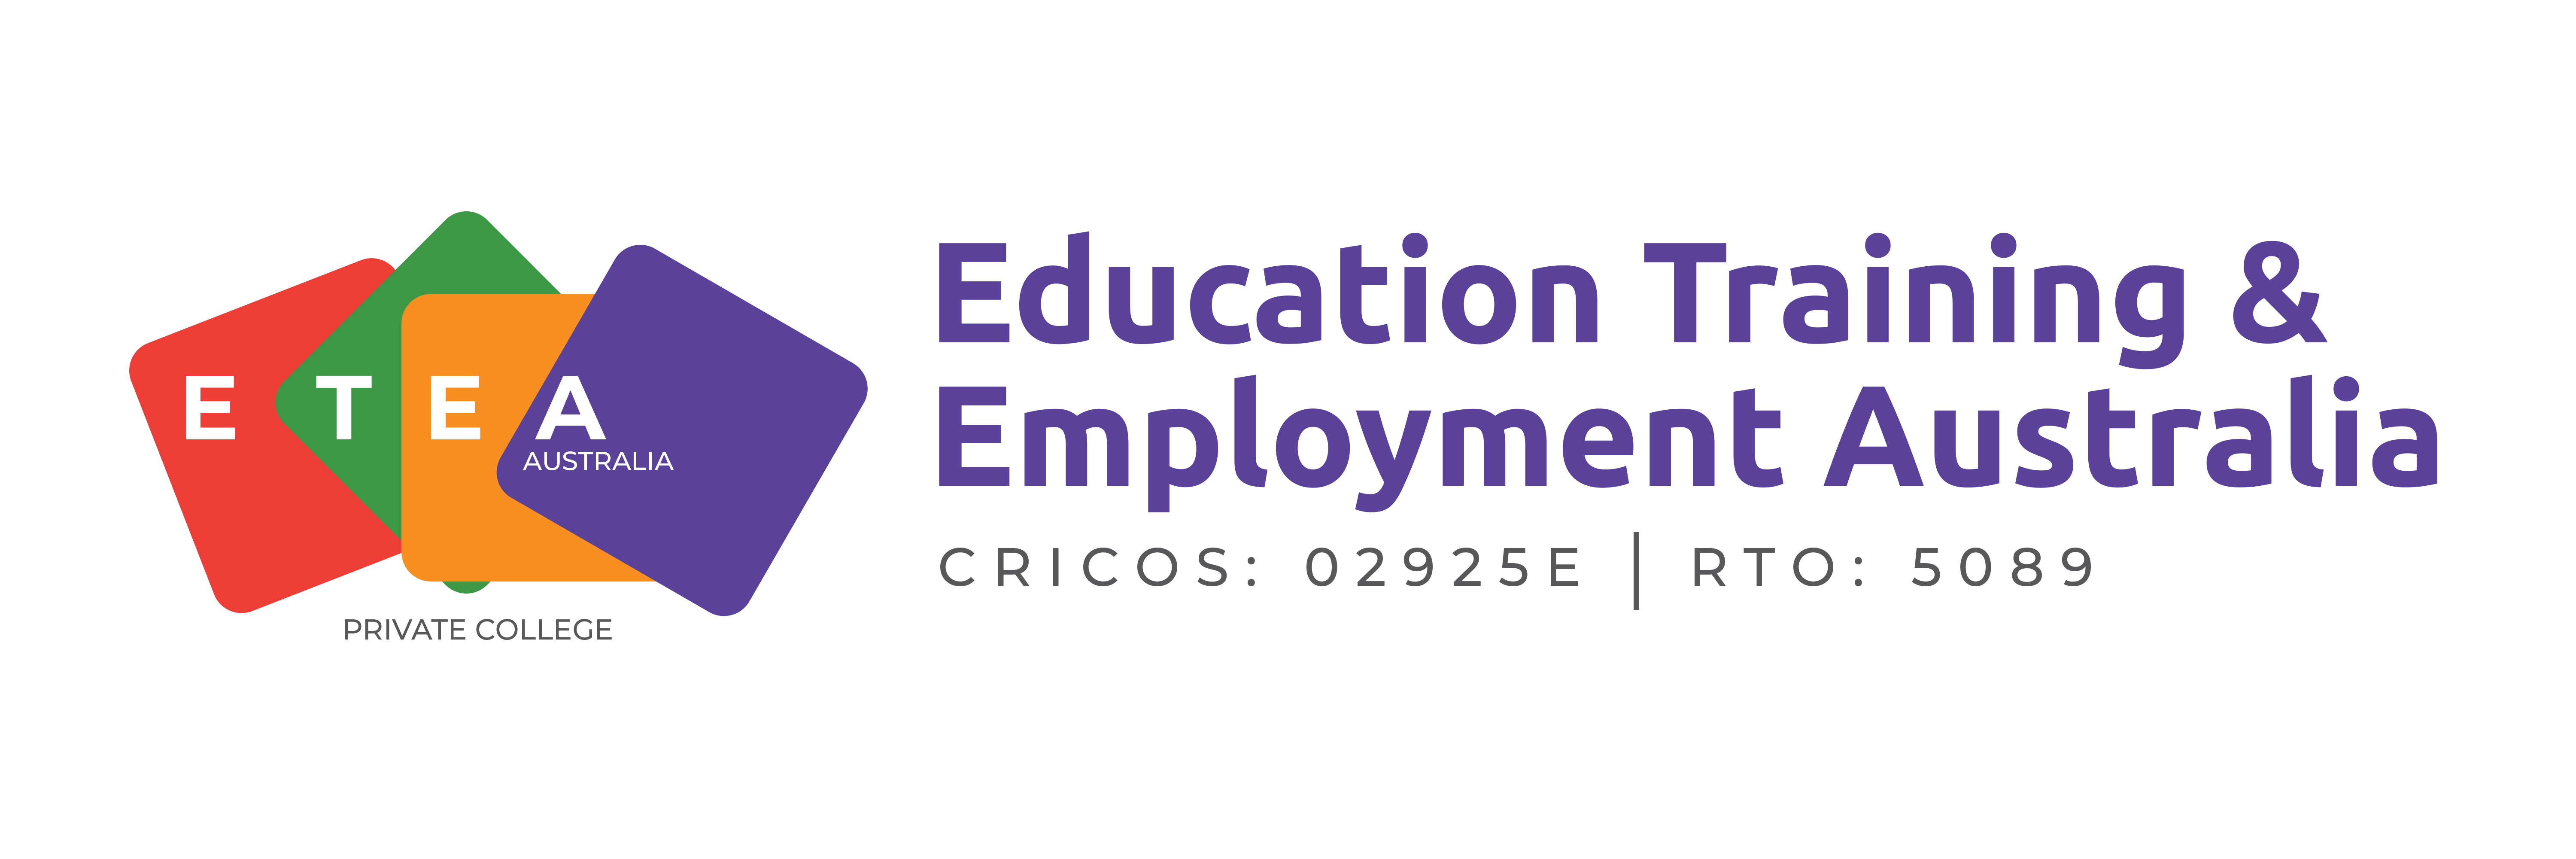 Western Australia - Education Training and Employment Australia